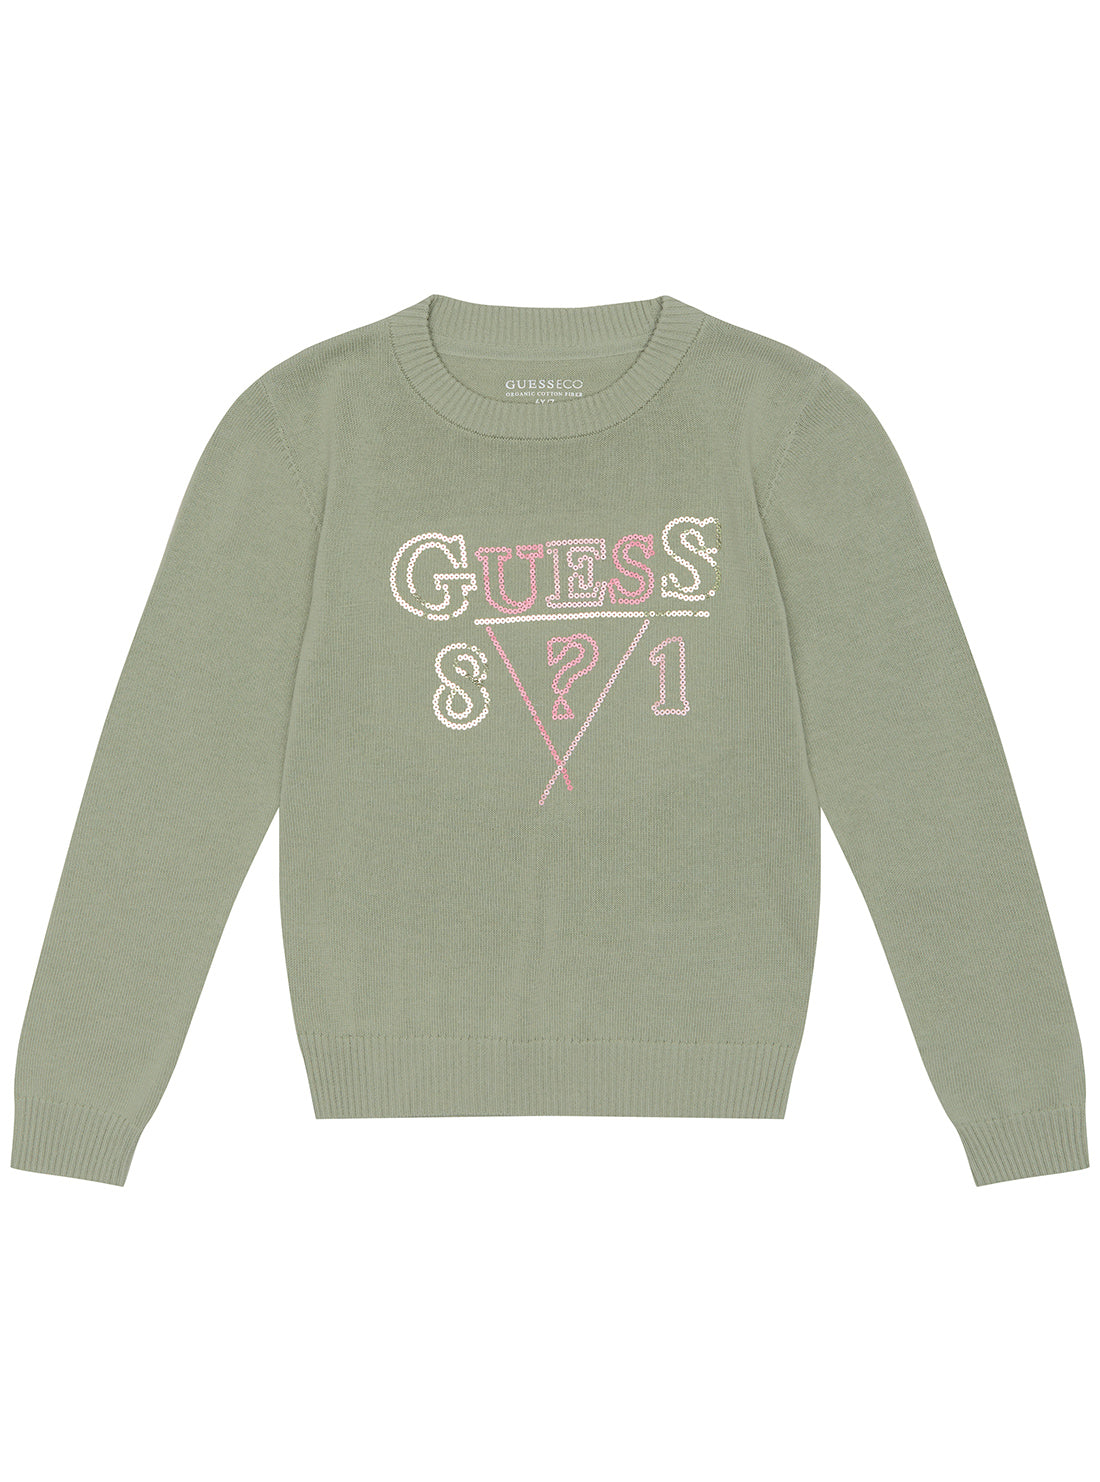 Matcha Green Long Sleeve Logo Knit Top (2-7) | GUESS Kids | front view